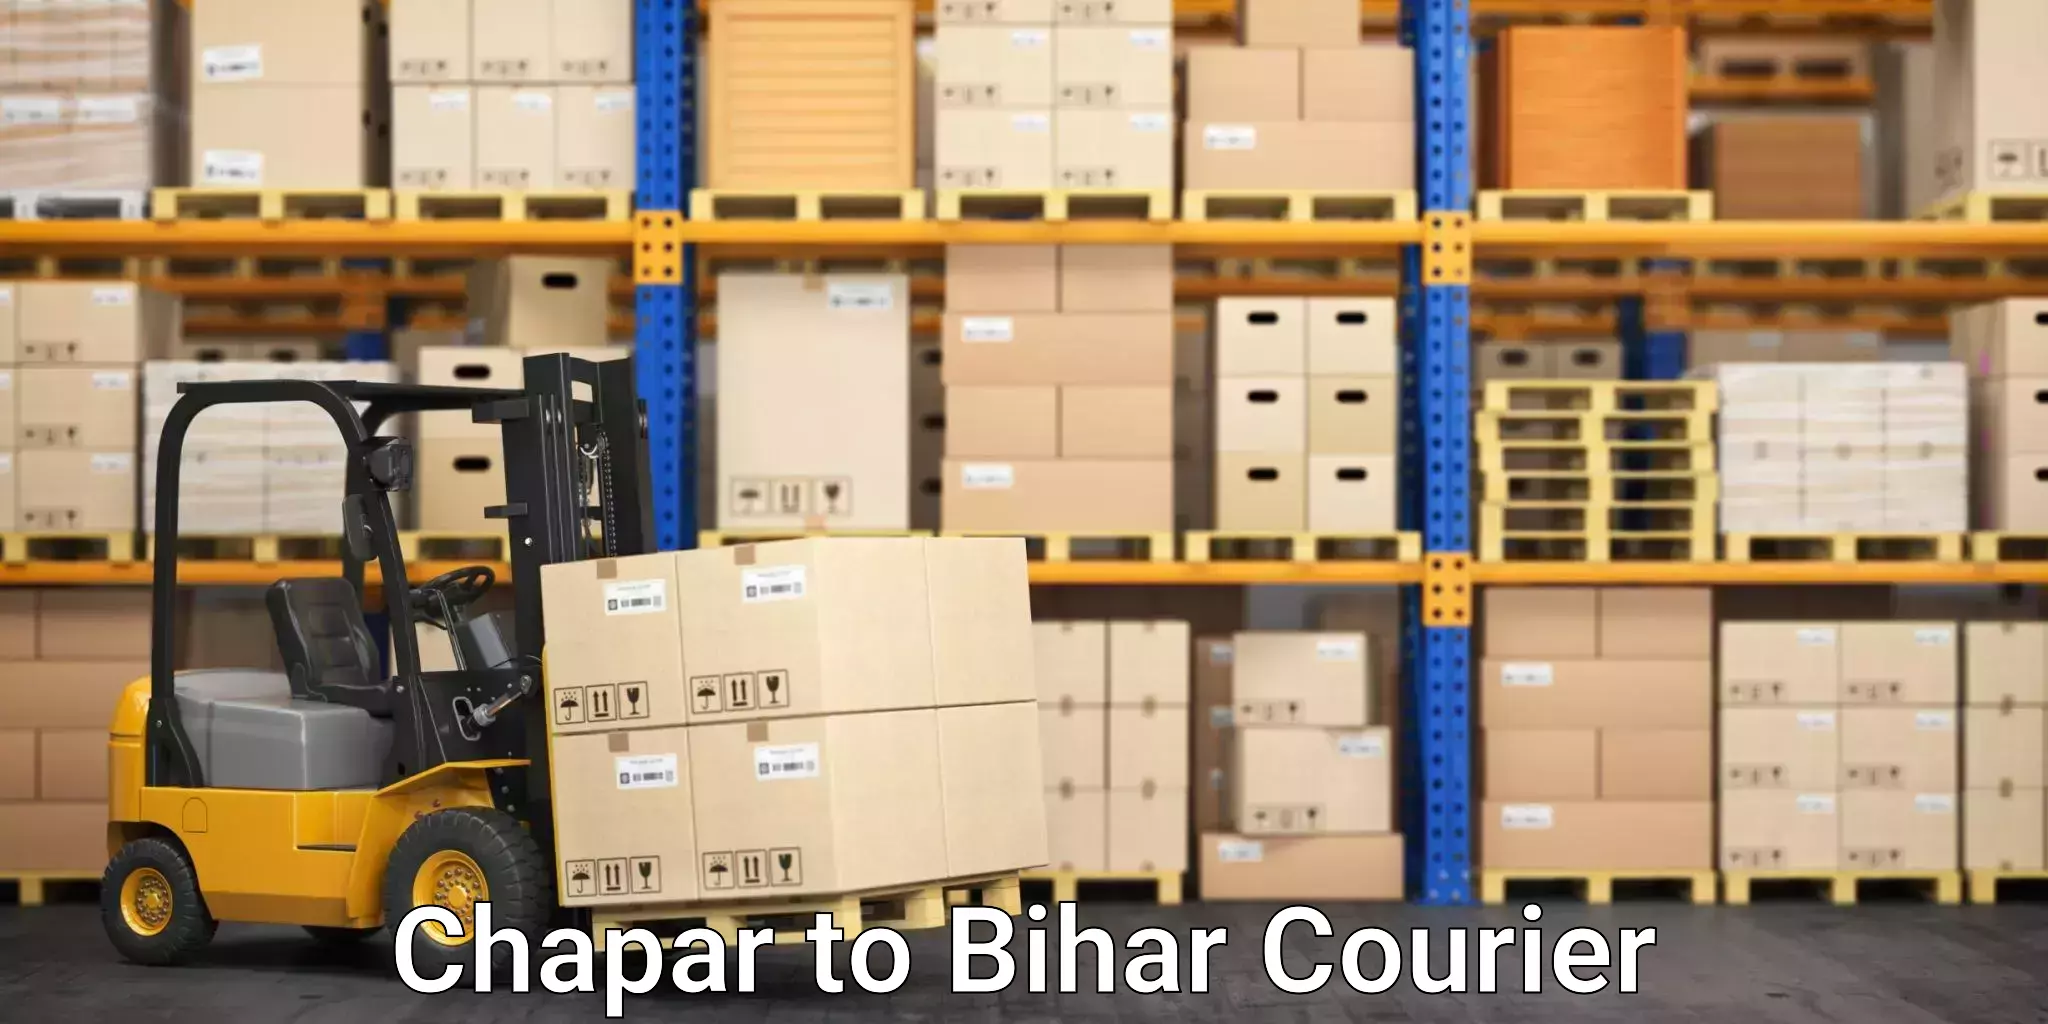 Cash on delivery service Chapar to Bihar